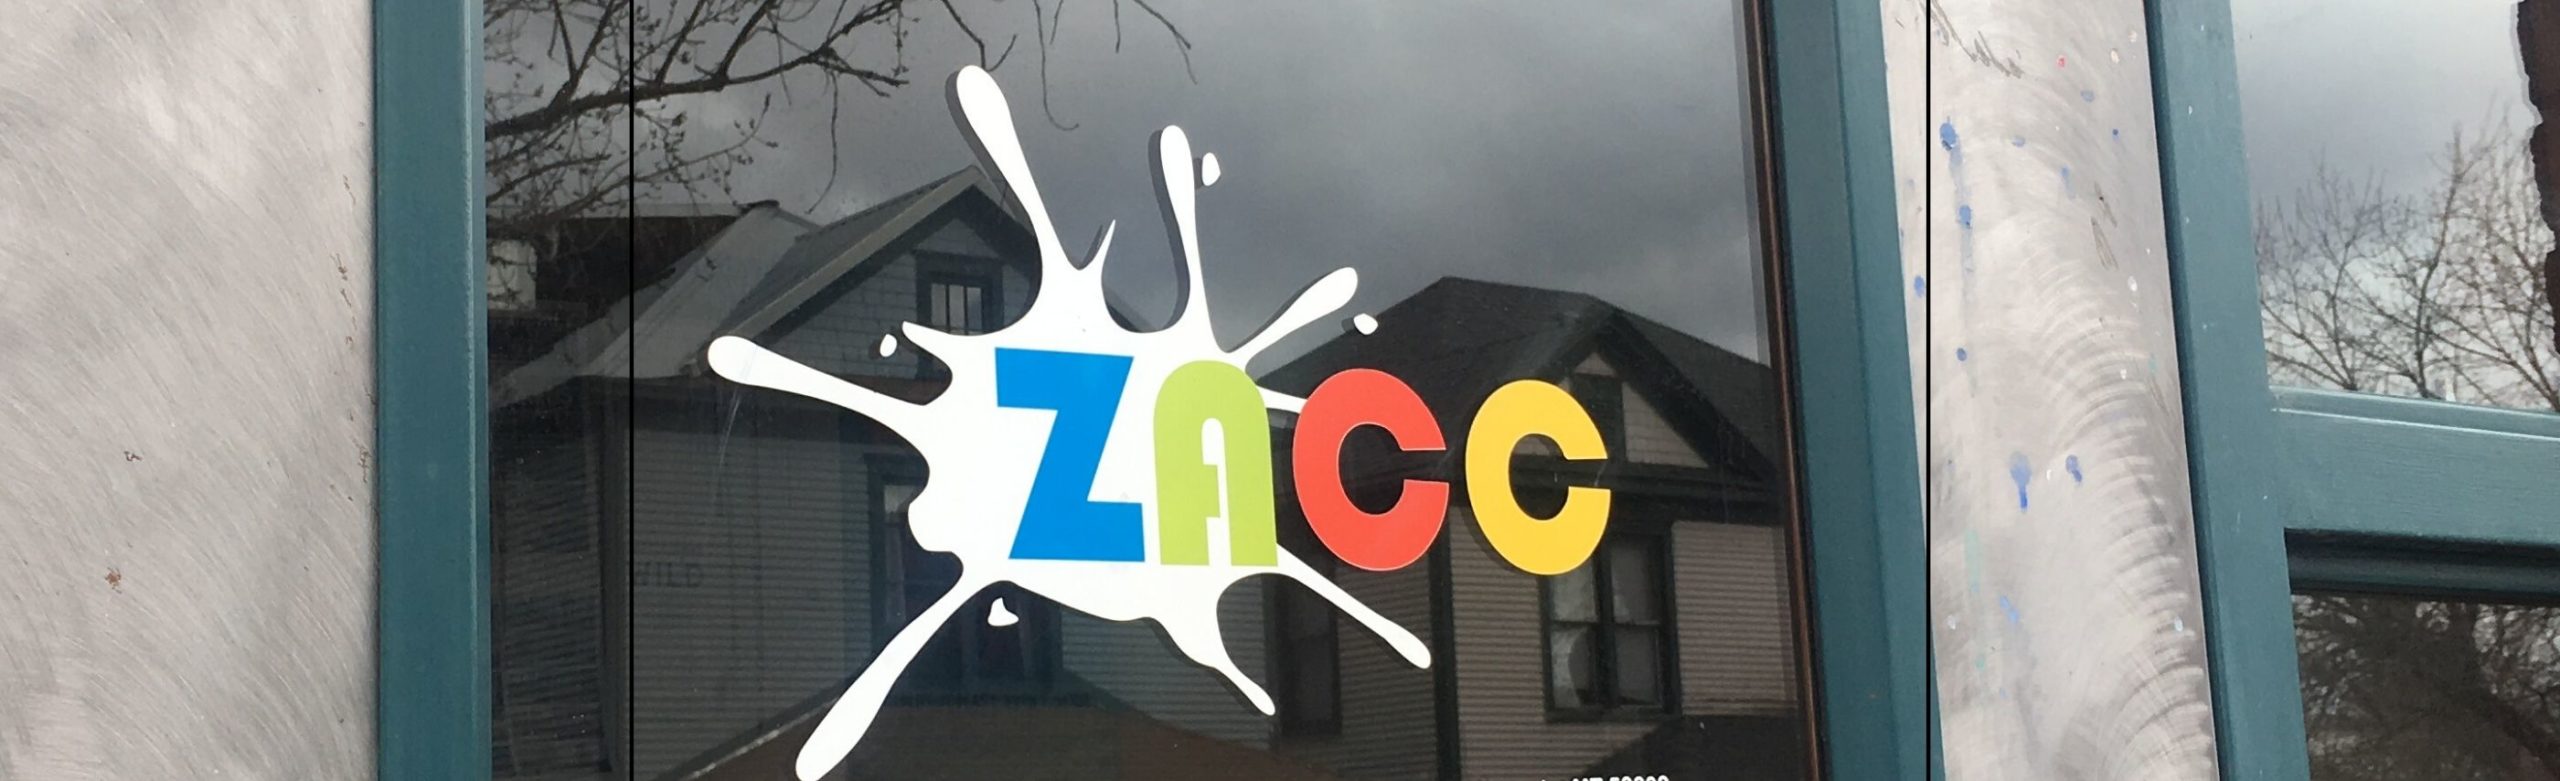 ZACC Mini Show Fundraiser Moves Online Image